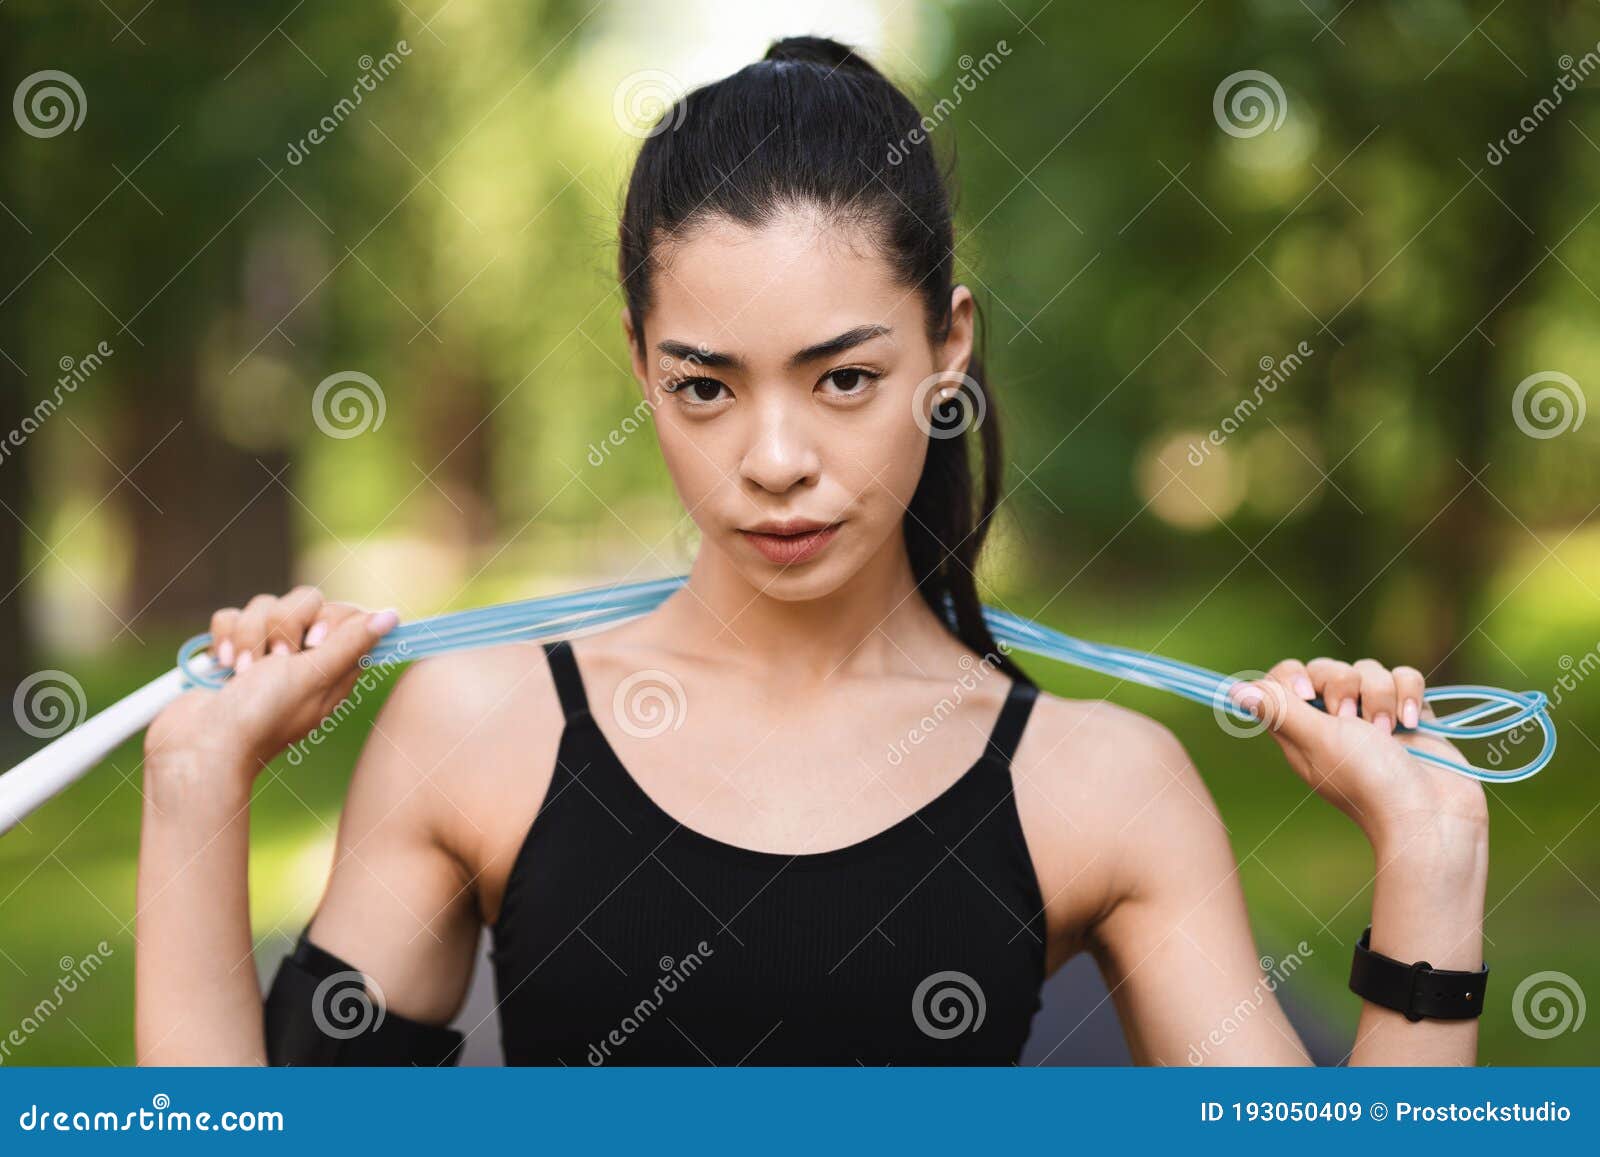 asian girl in ropes posing